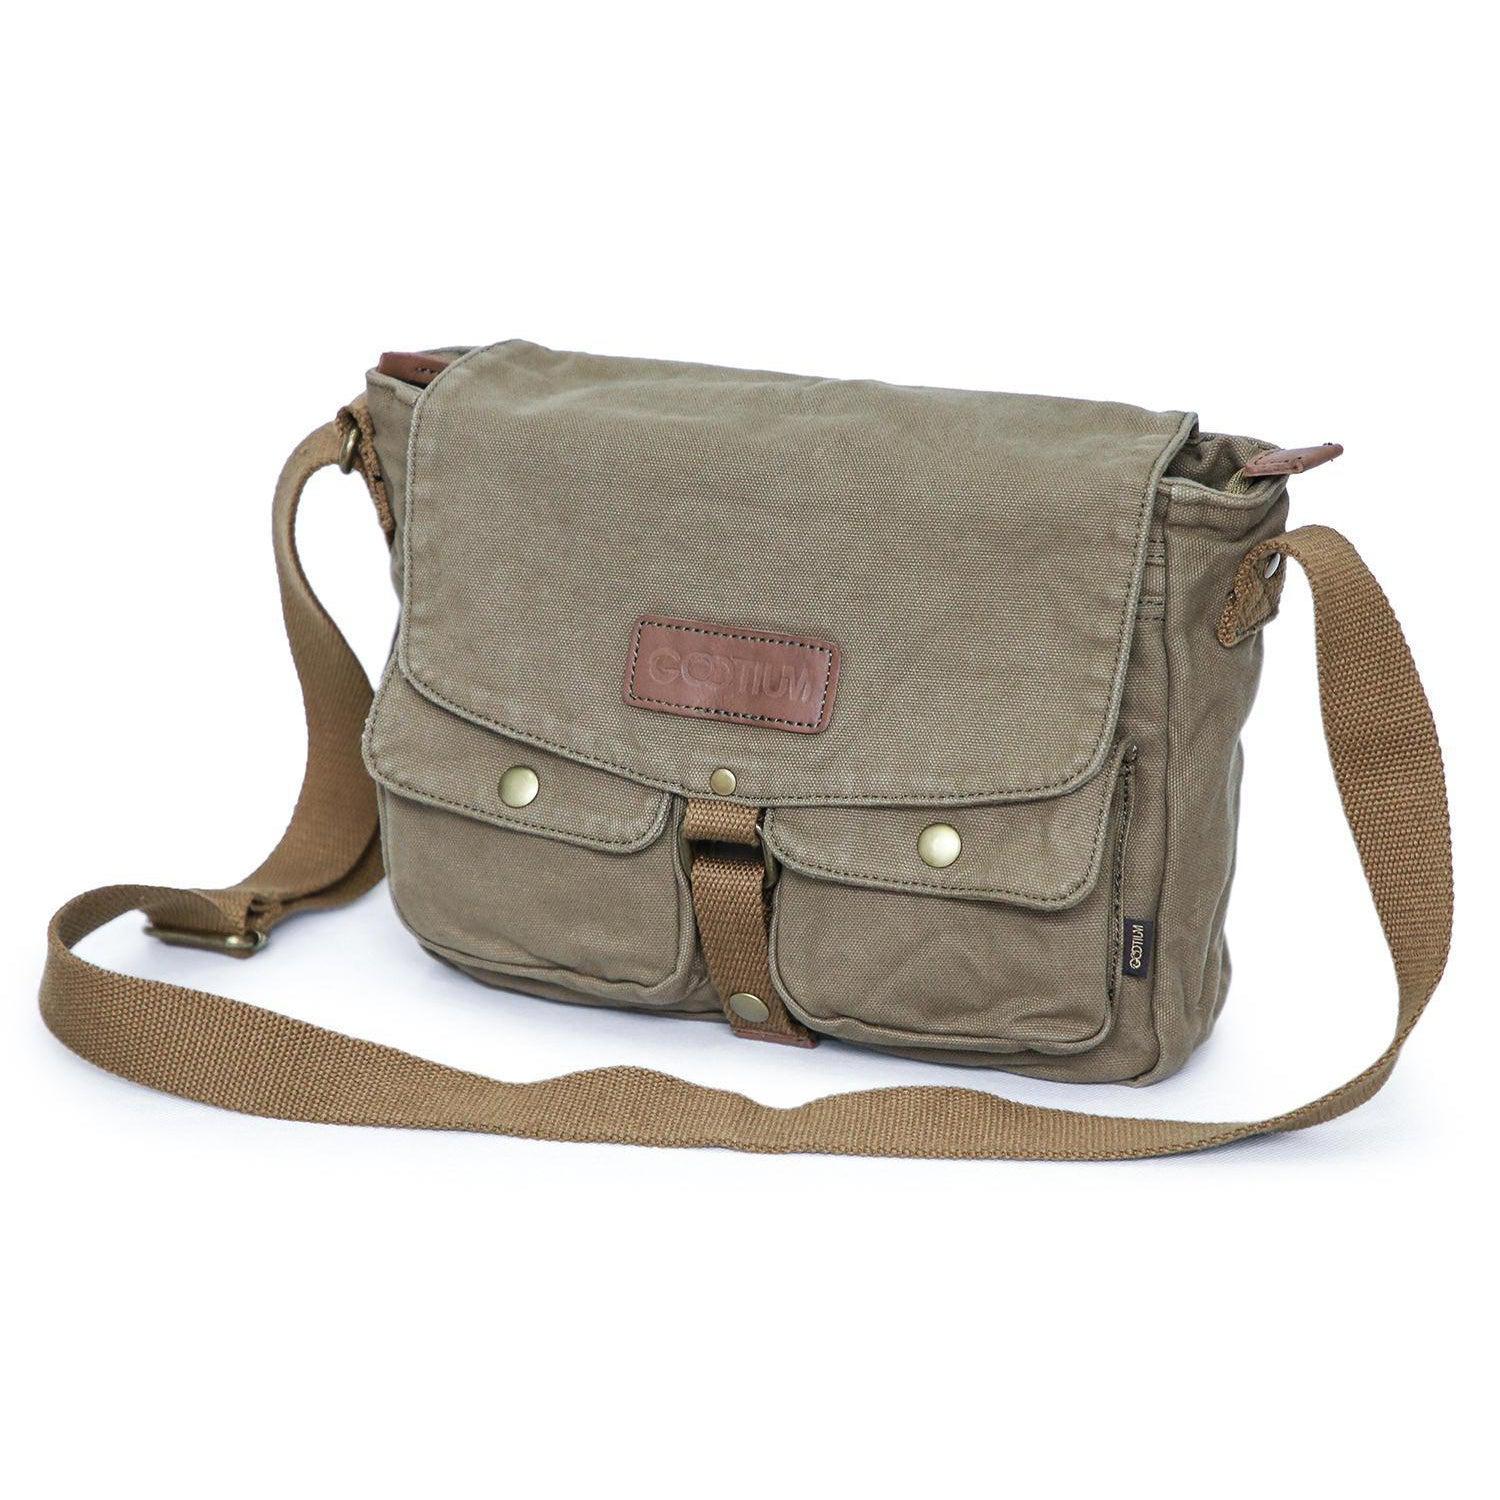  Gootium Canvas Messenger Bag - Vintage Crossbody Shoulder Bag  Military Satchel, Camo